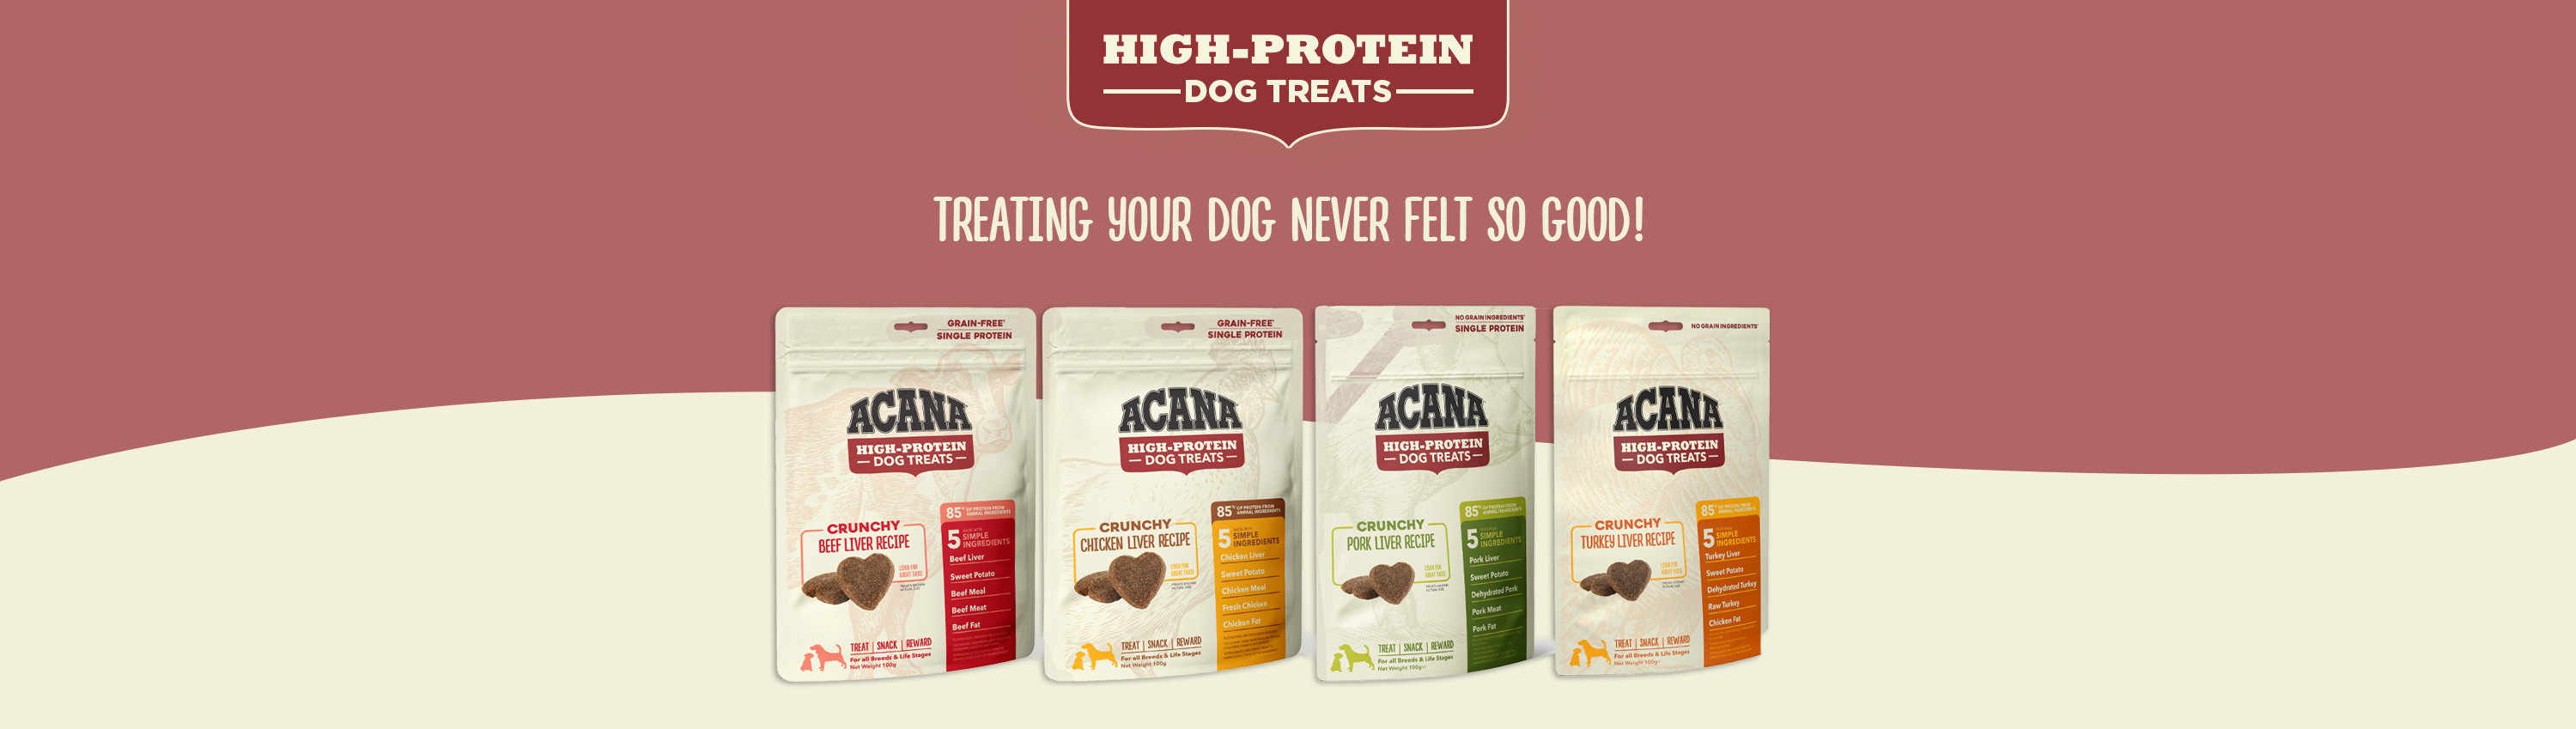 High protein treats